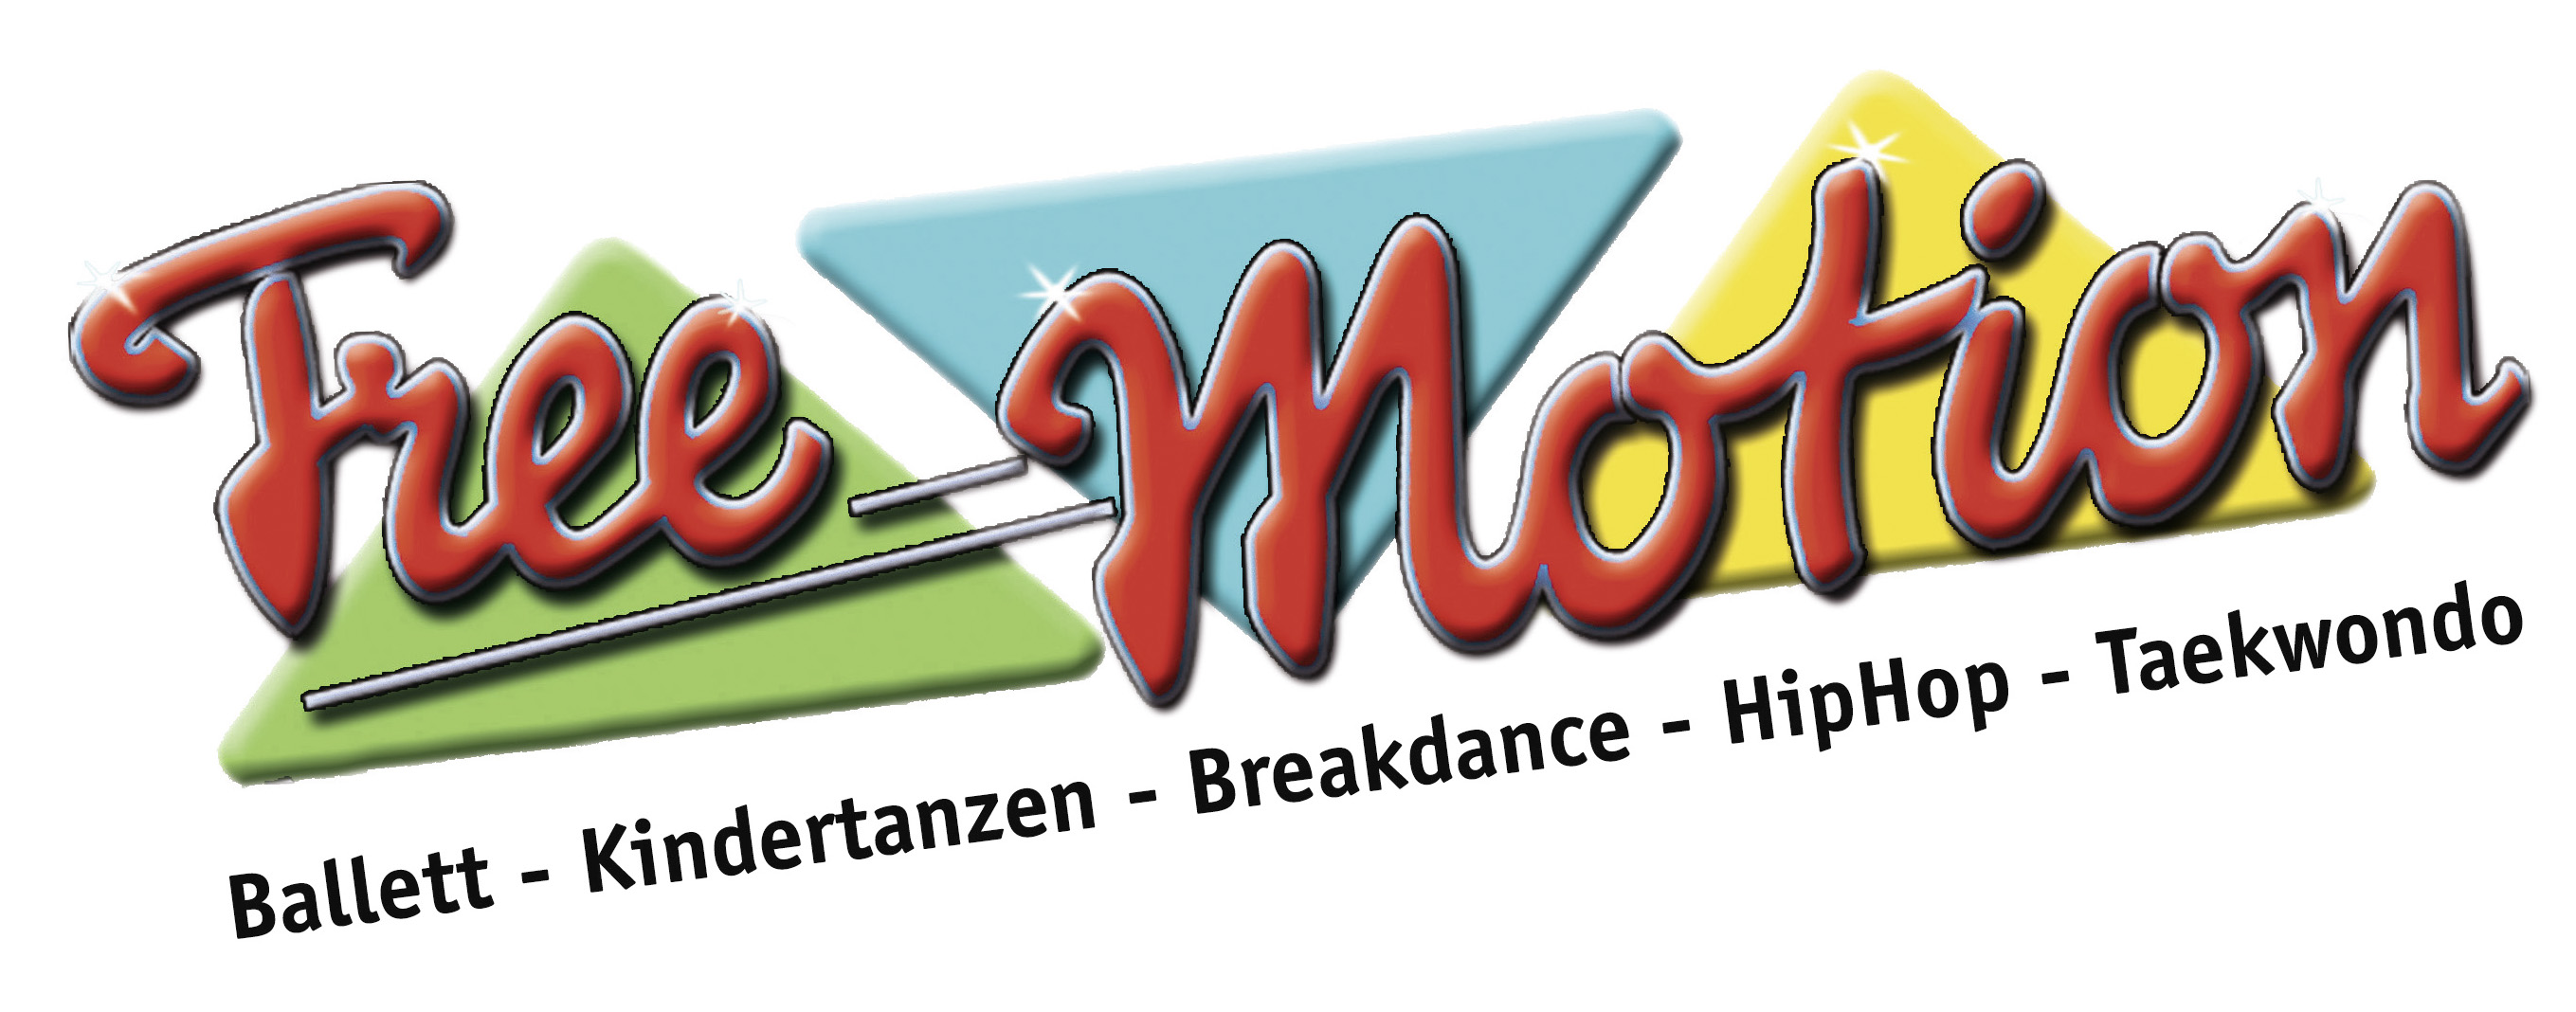 Sportstudio Free Motion Logo